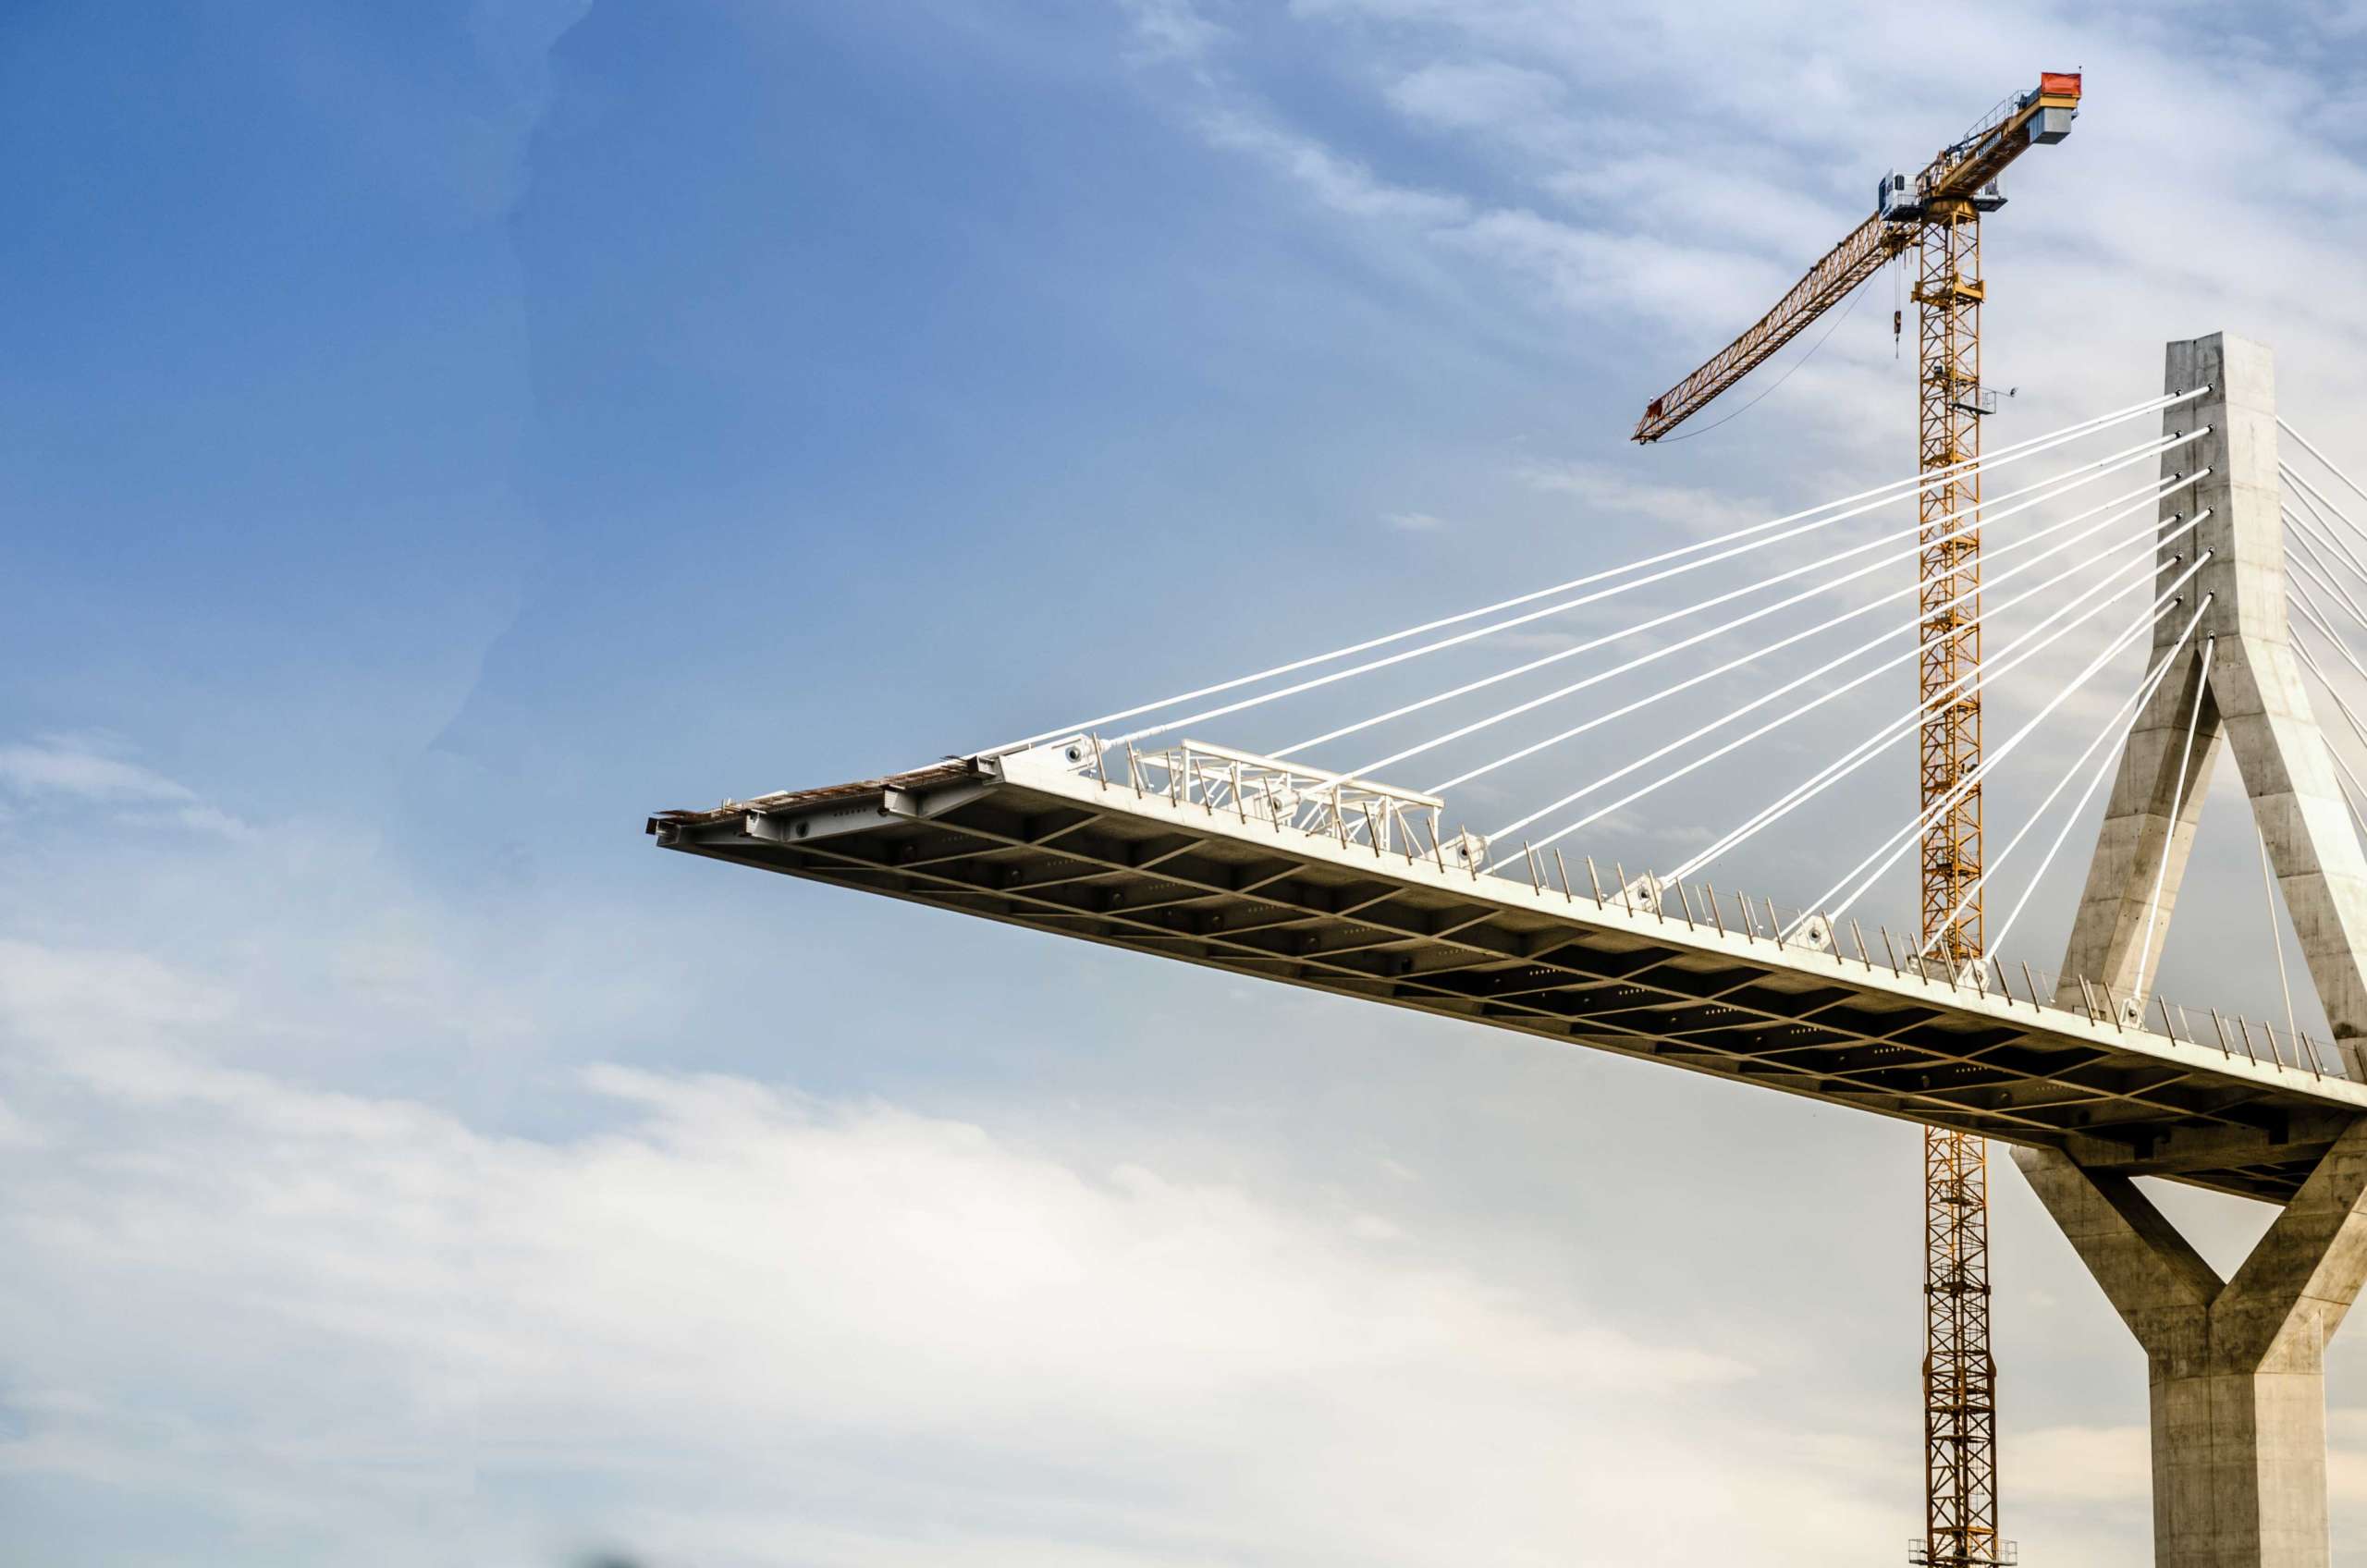 Bridge under construction with a crane